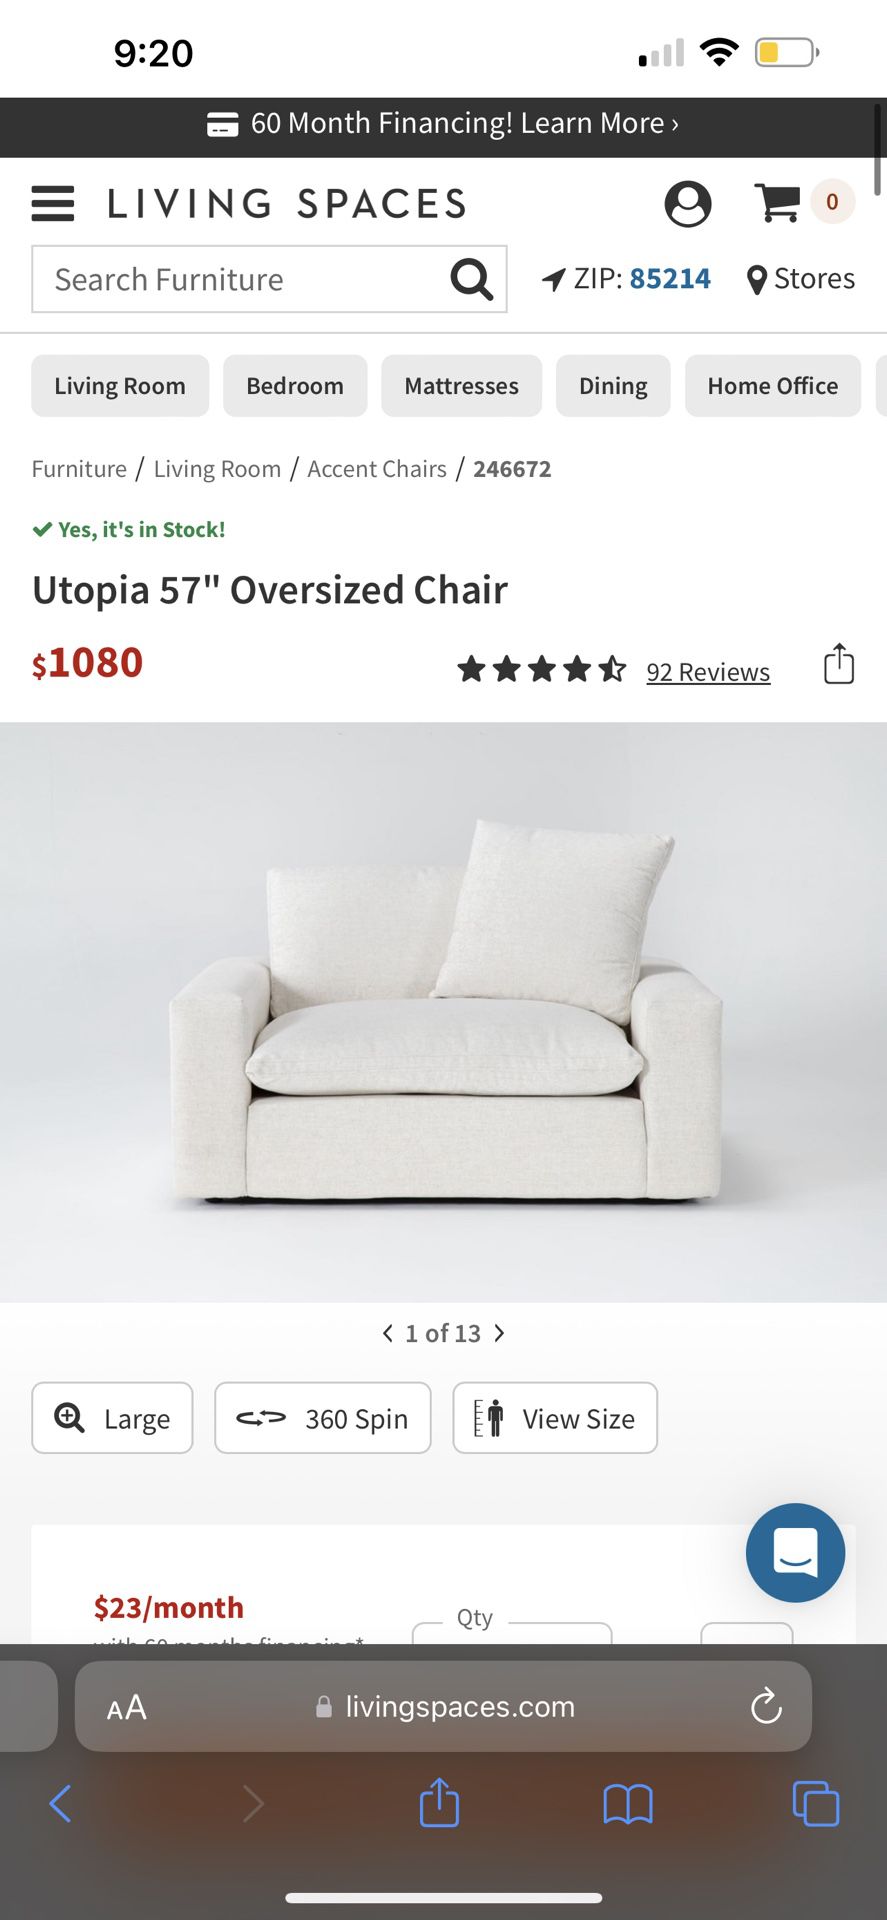 Utopia 57 Oversized Chair